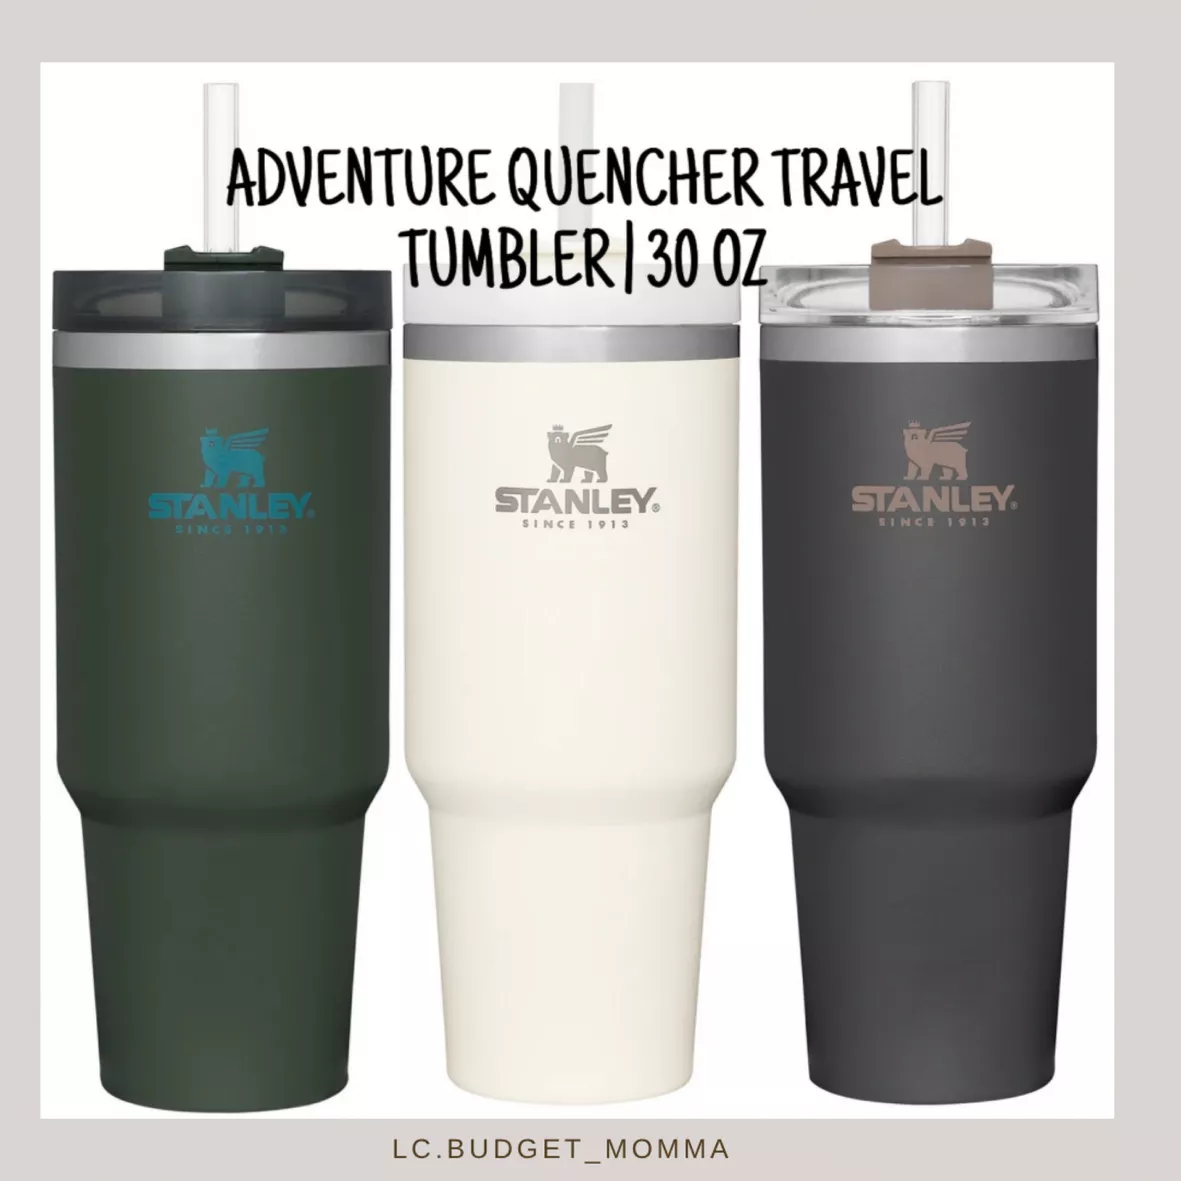 Adventure Quencher Travel Tumbler, 30 OZ